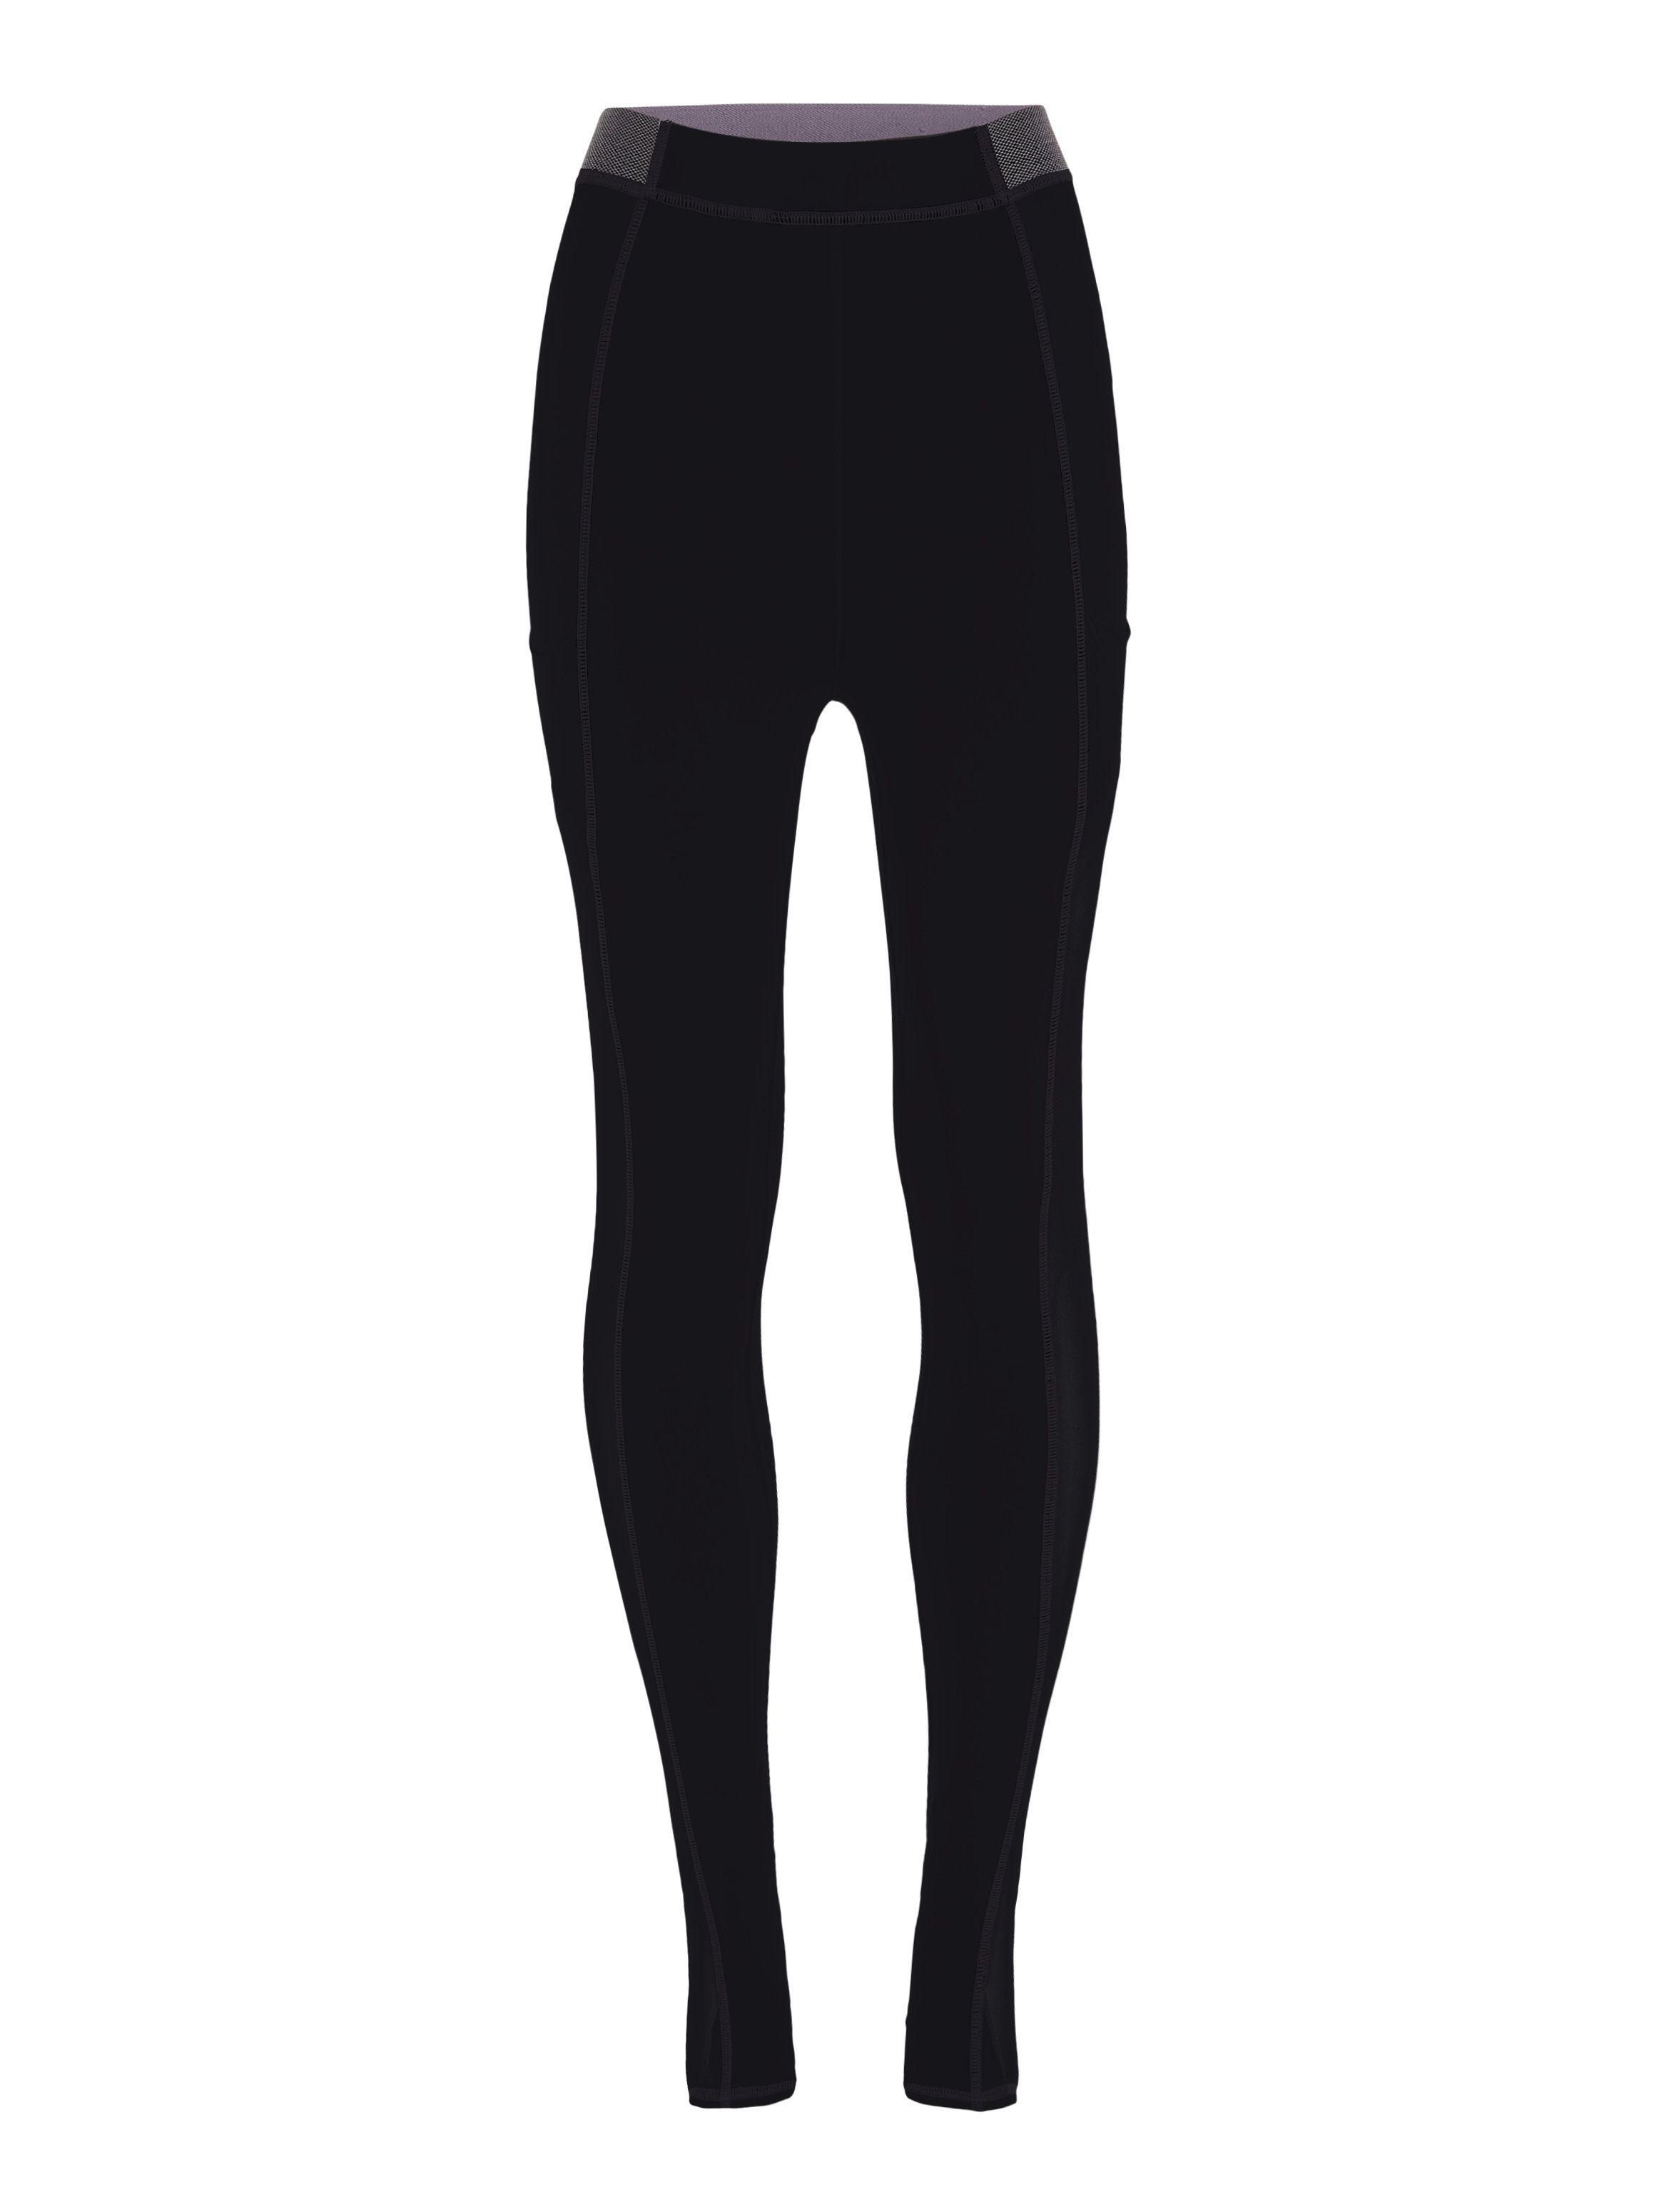 Calvin Klein (7/8) Sport WO - schwarz 7/8-Leggings Legging